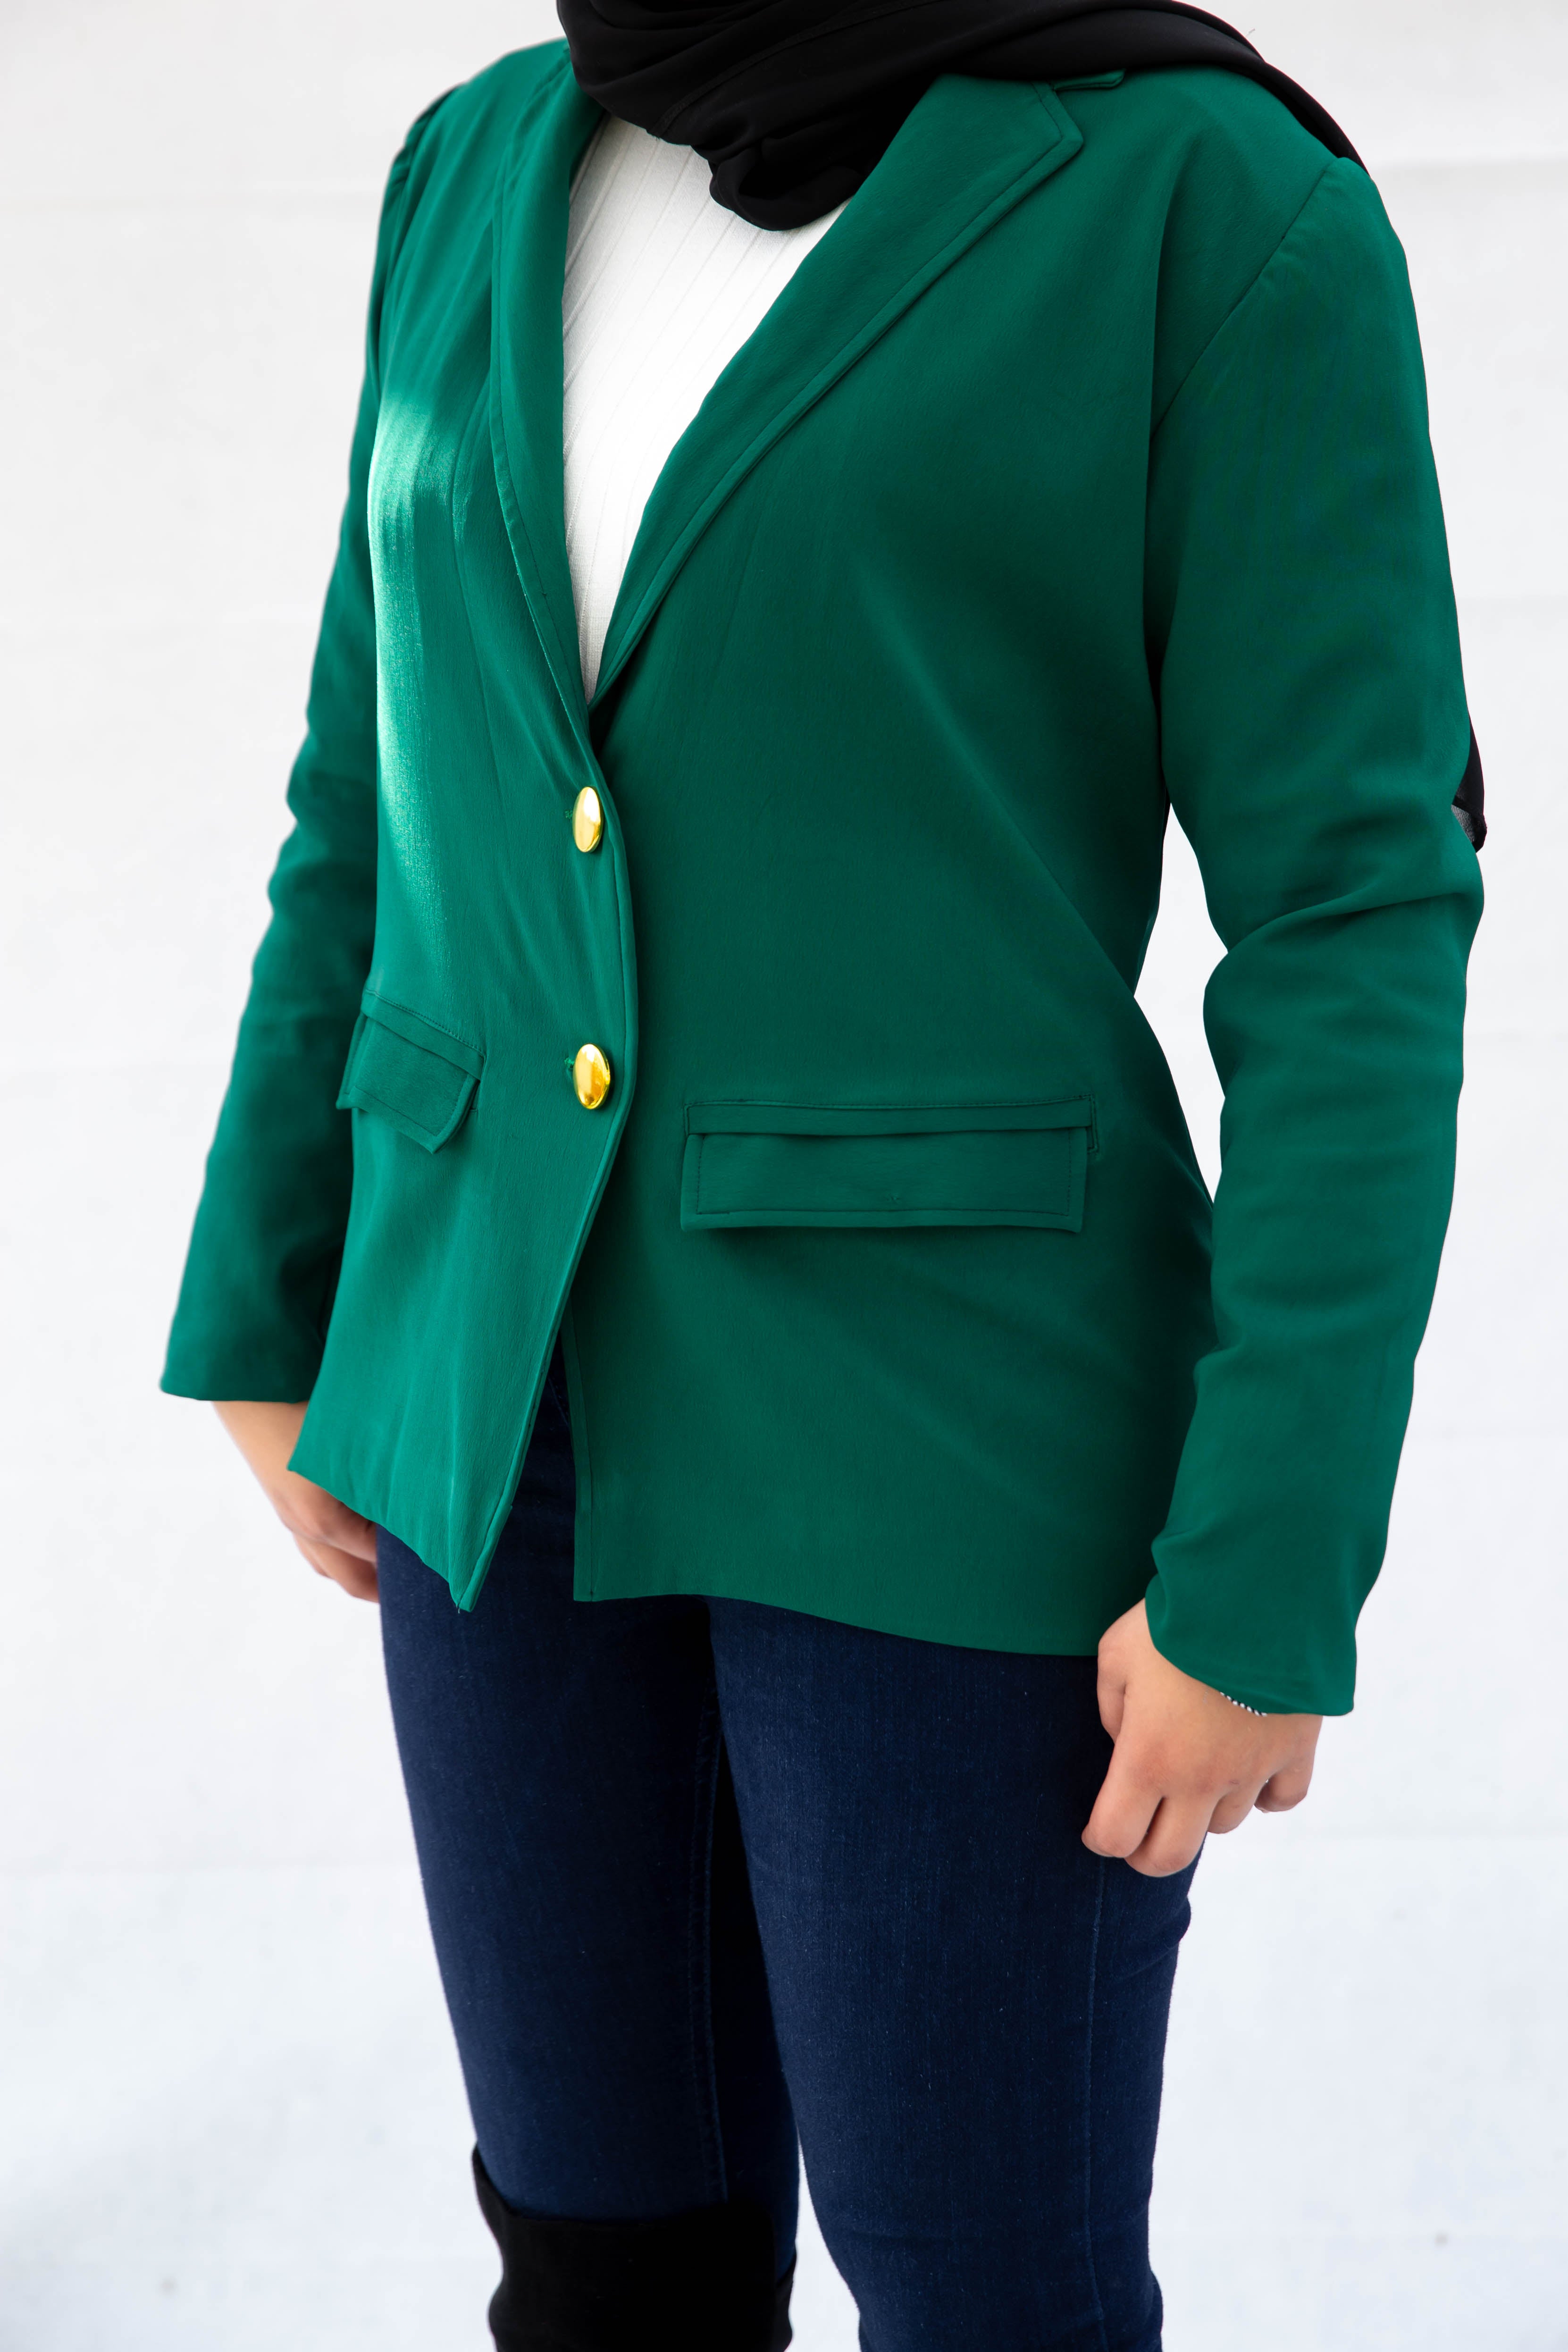 The green blazer  - green